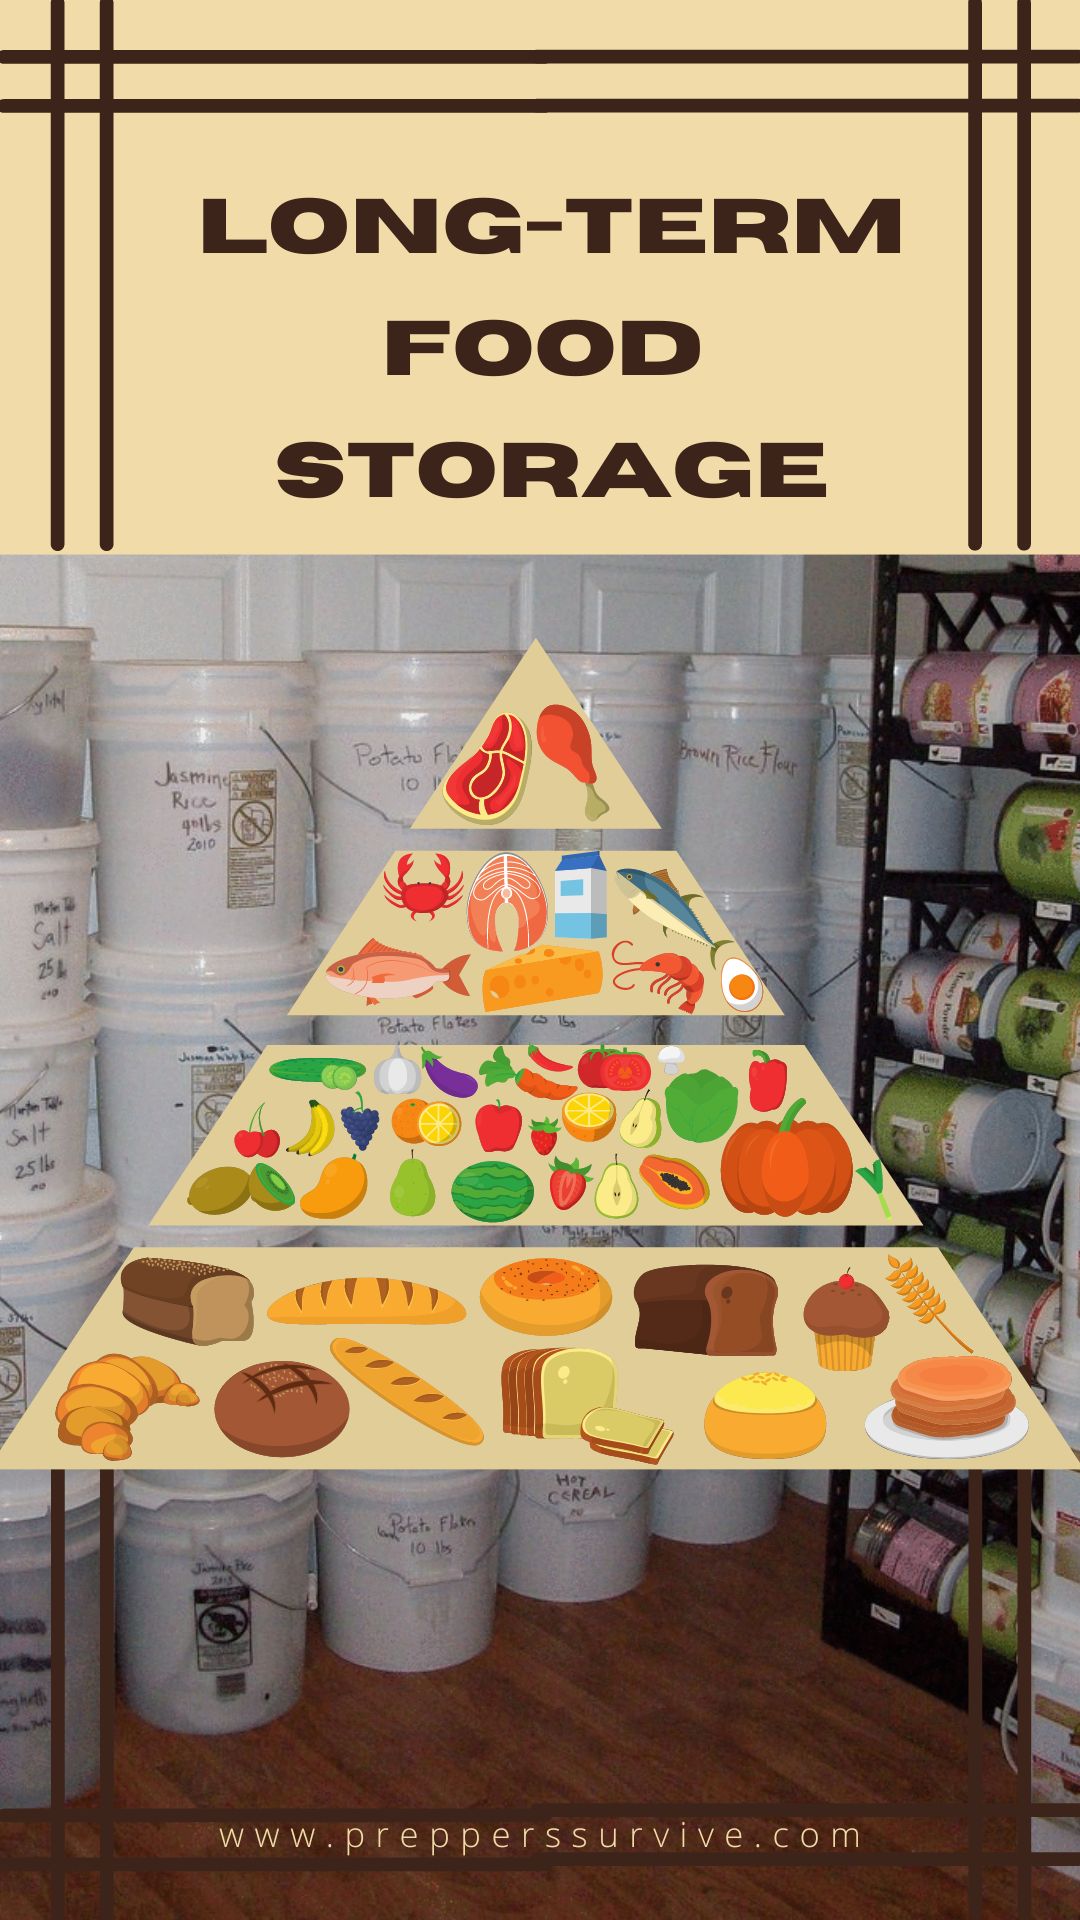 Food Storage - Long term food supply